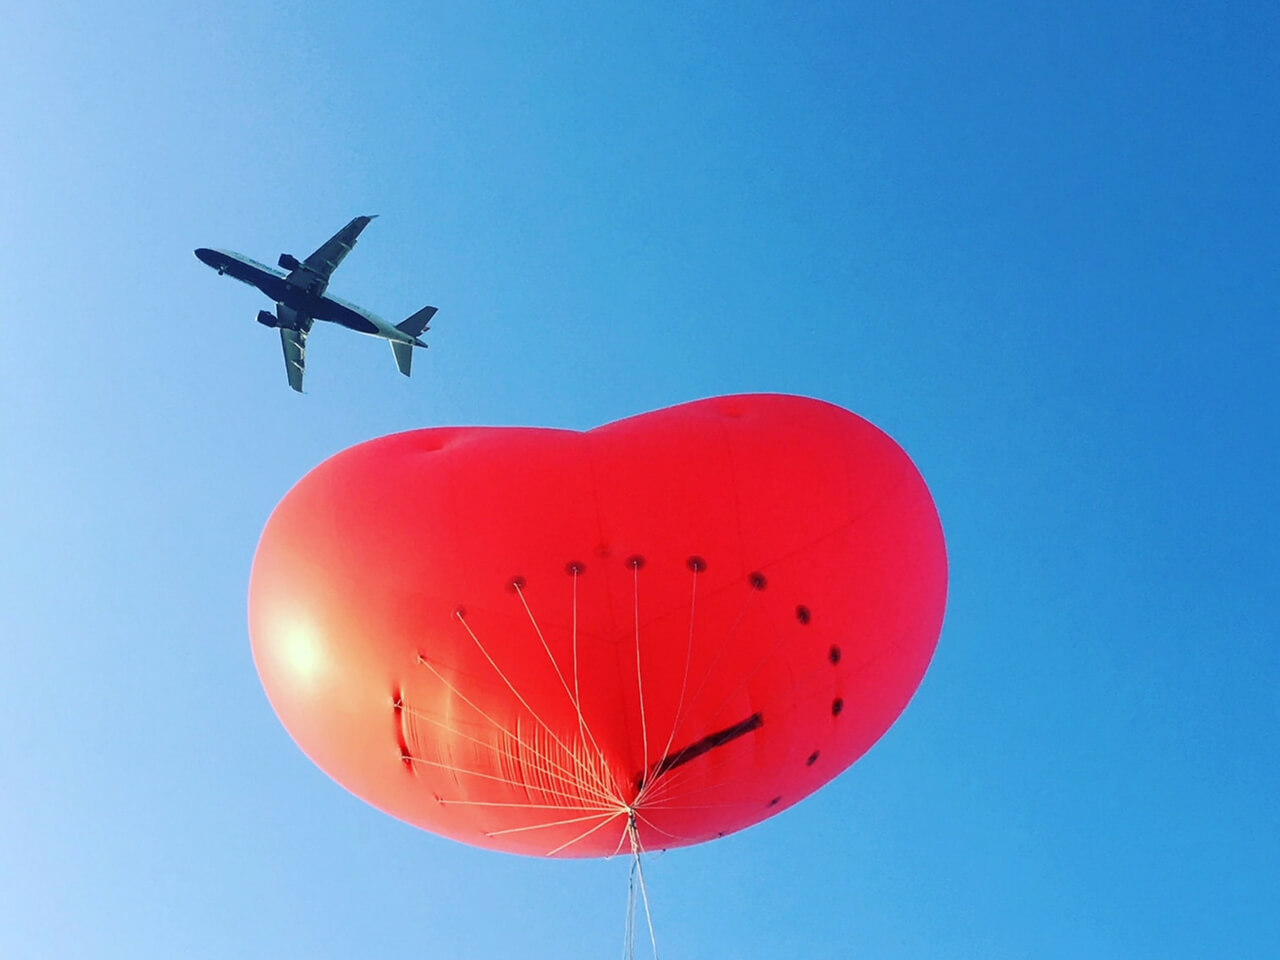 Aeroplane flying above inflatable heart